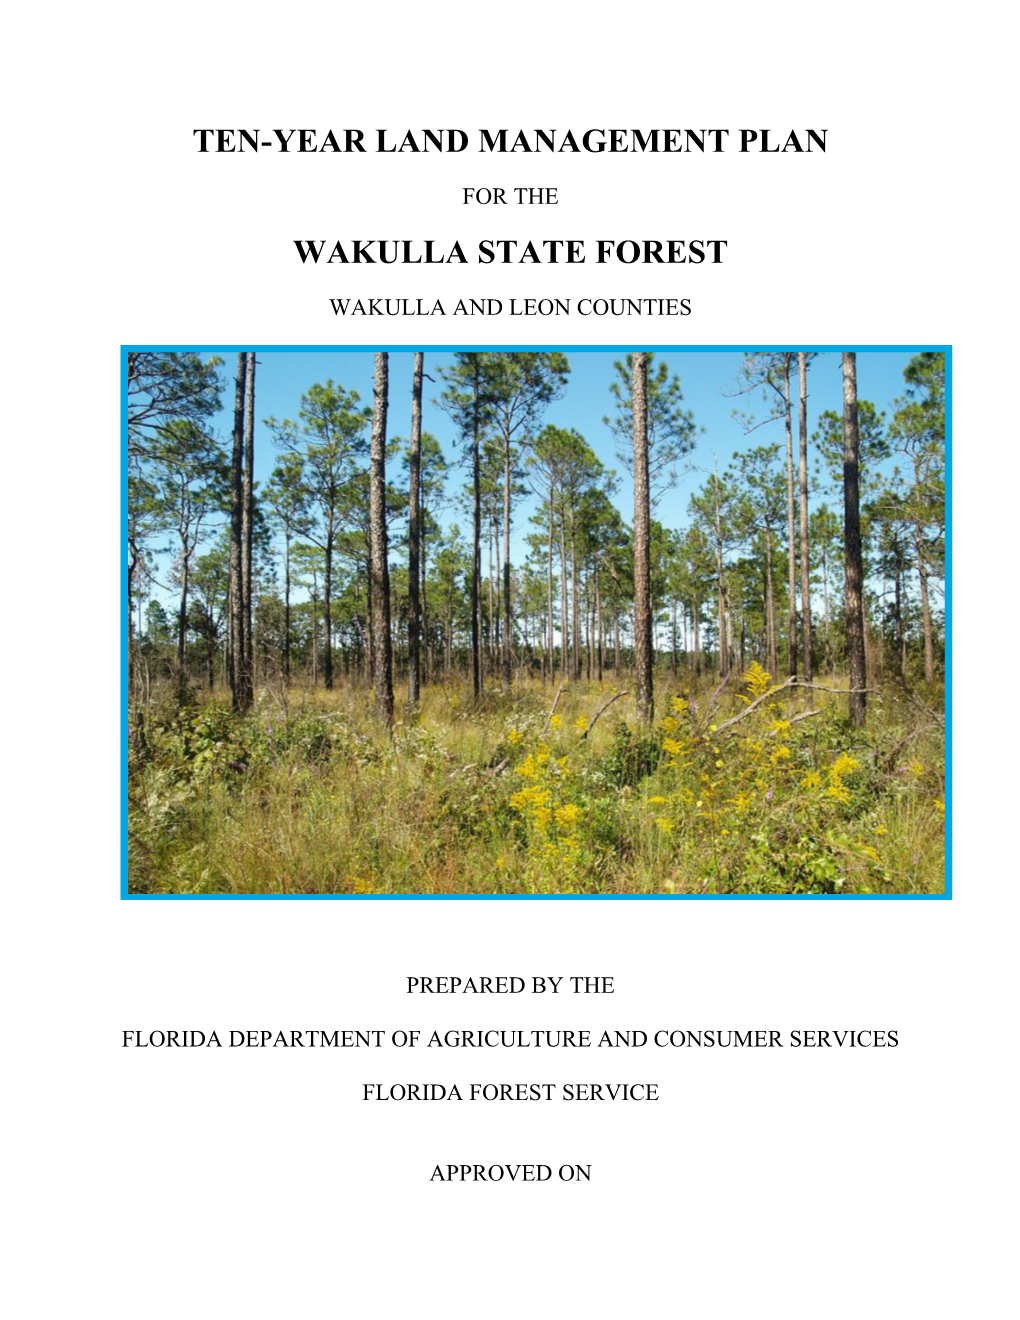 Wakulla State Forest Ten-Year Land Management Plan